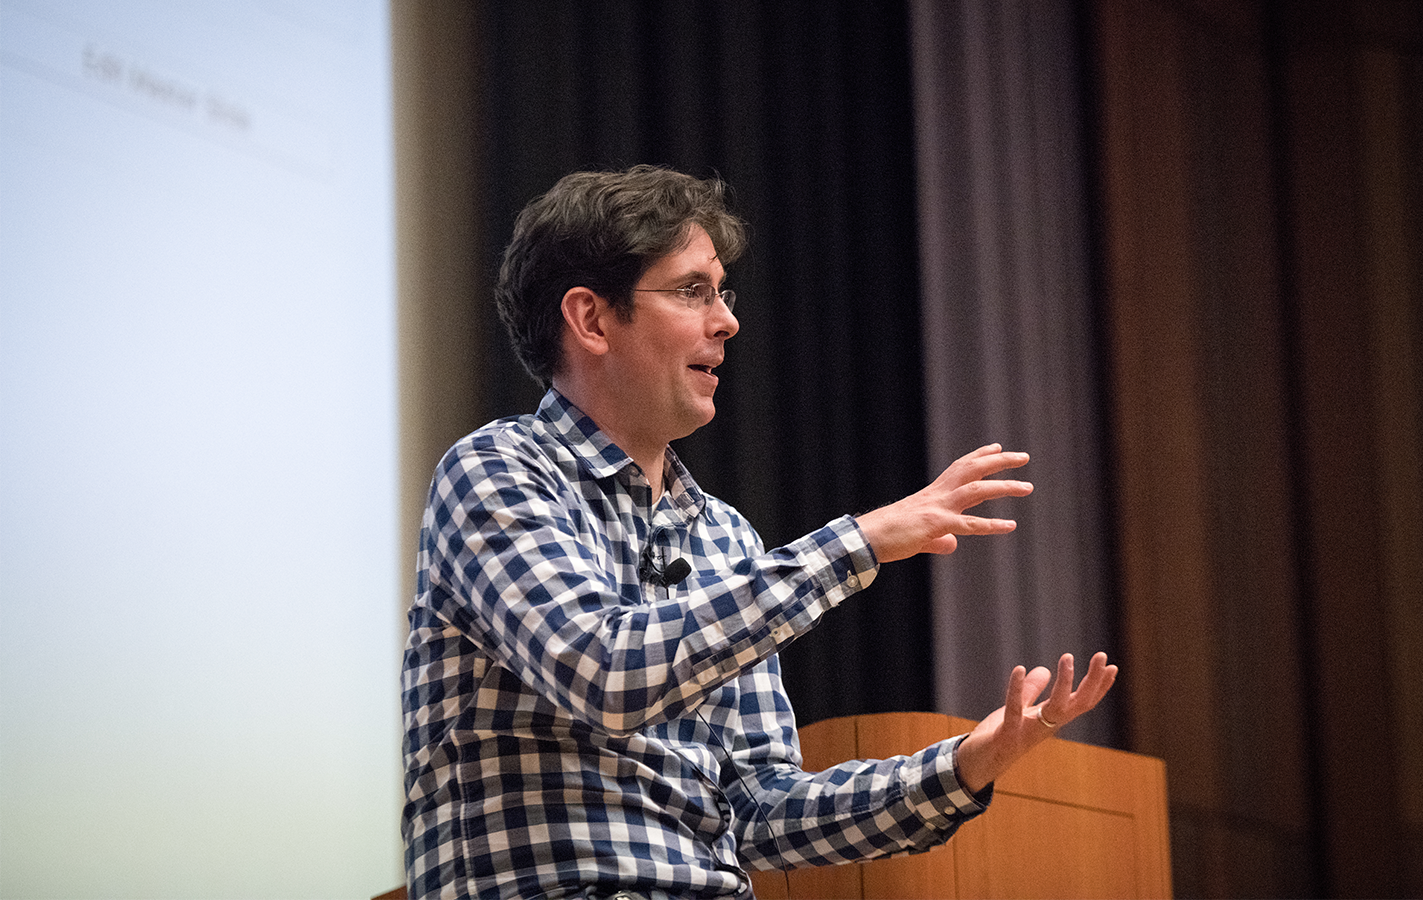 Professor John DeNero lecturing at front of Berkeley classroom